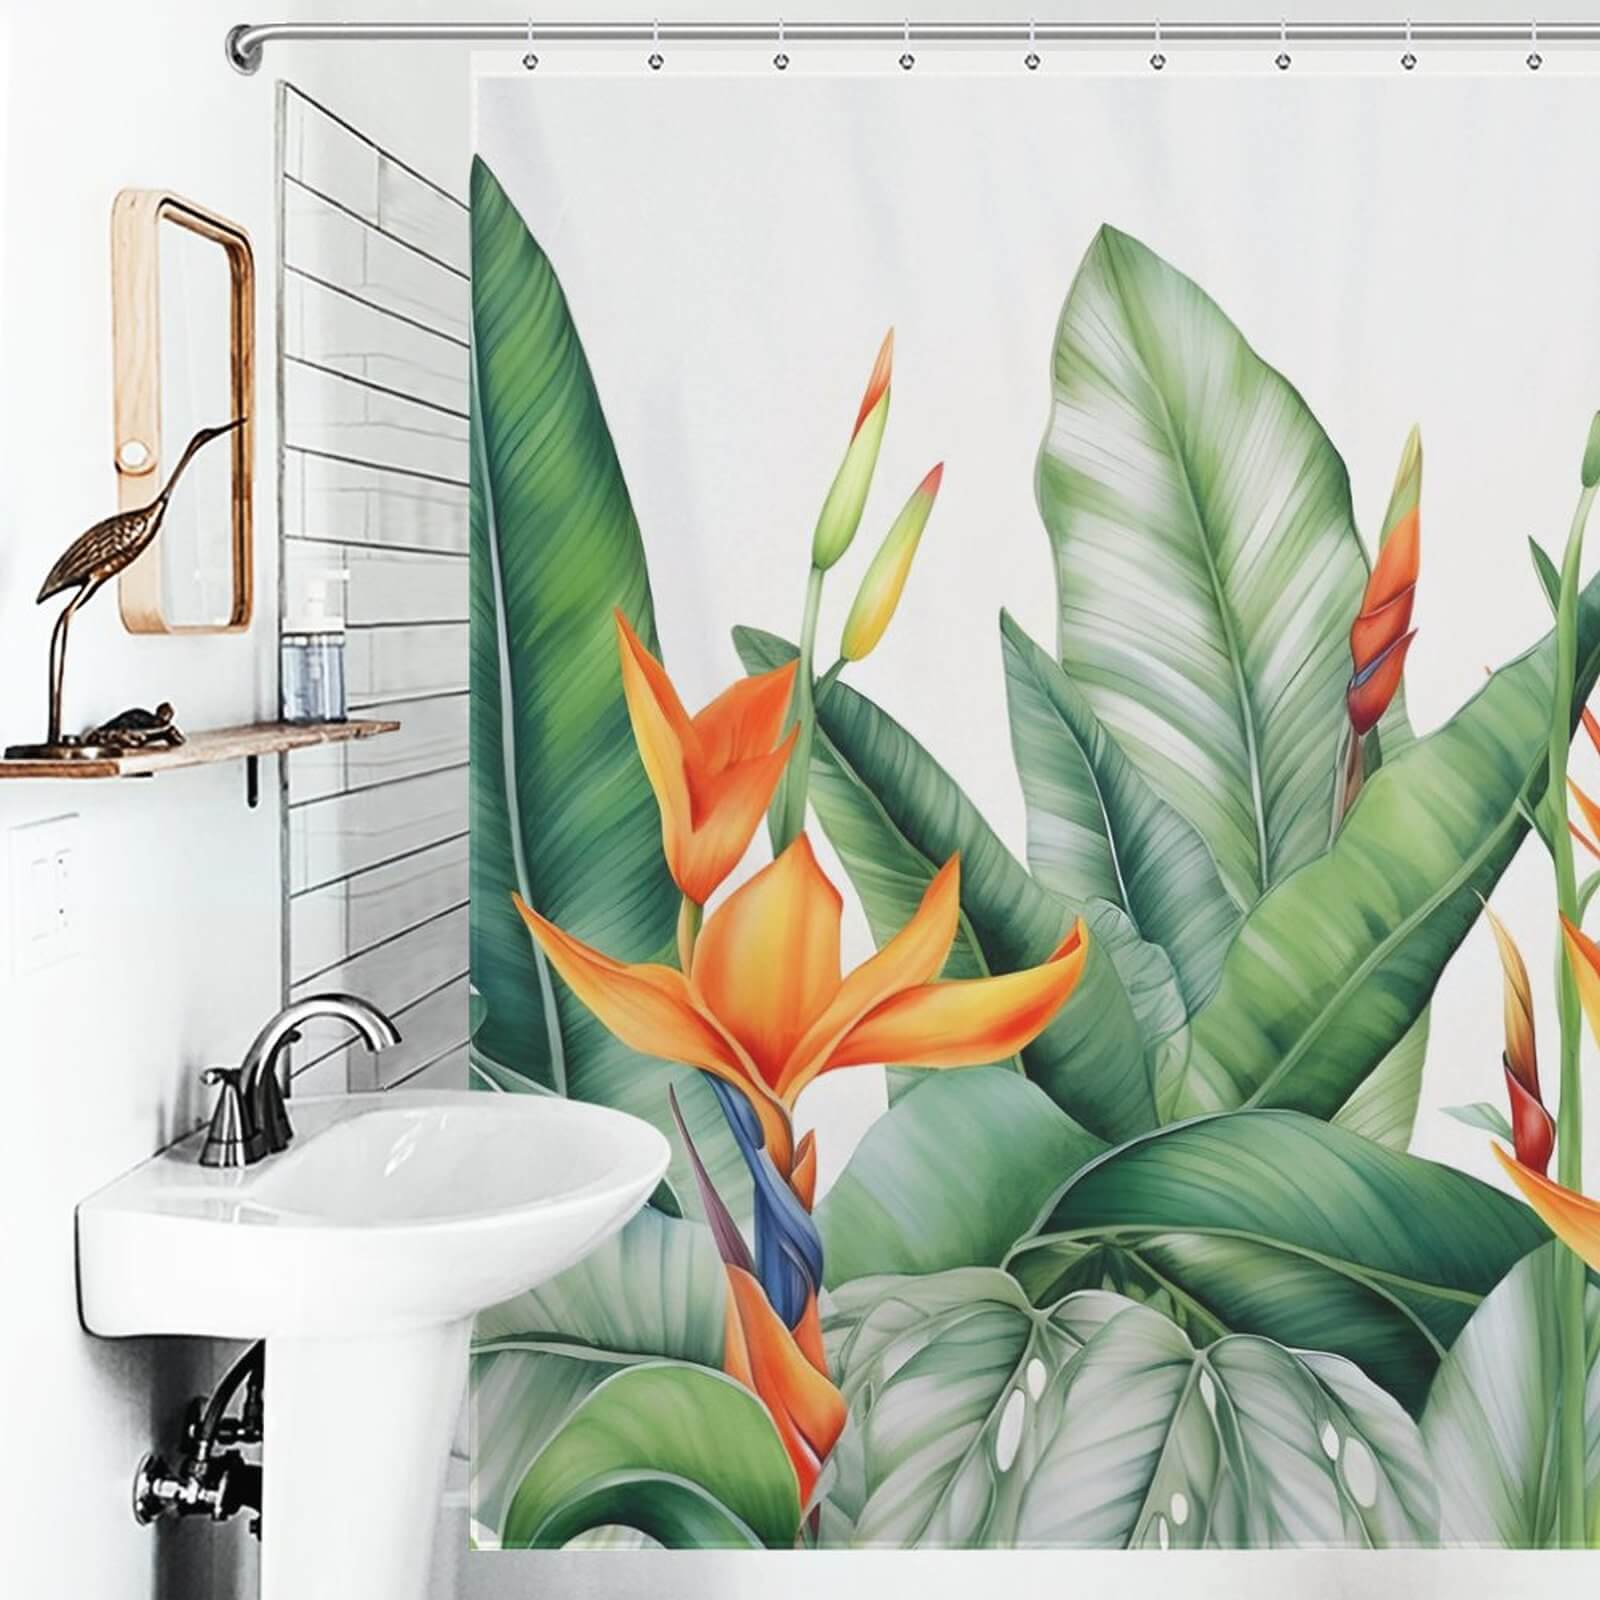 A tropical bathroom with a Cotton Cat Botanical Jungle Shower Curtain.